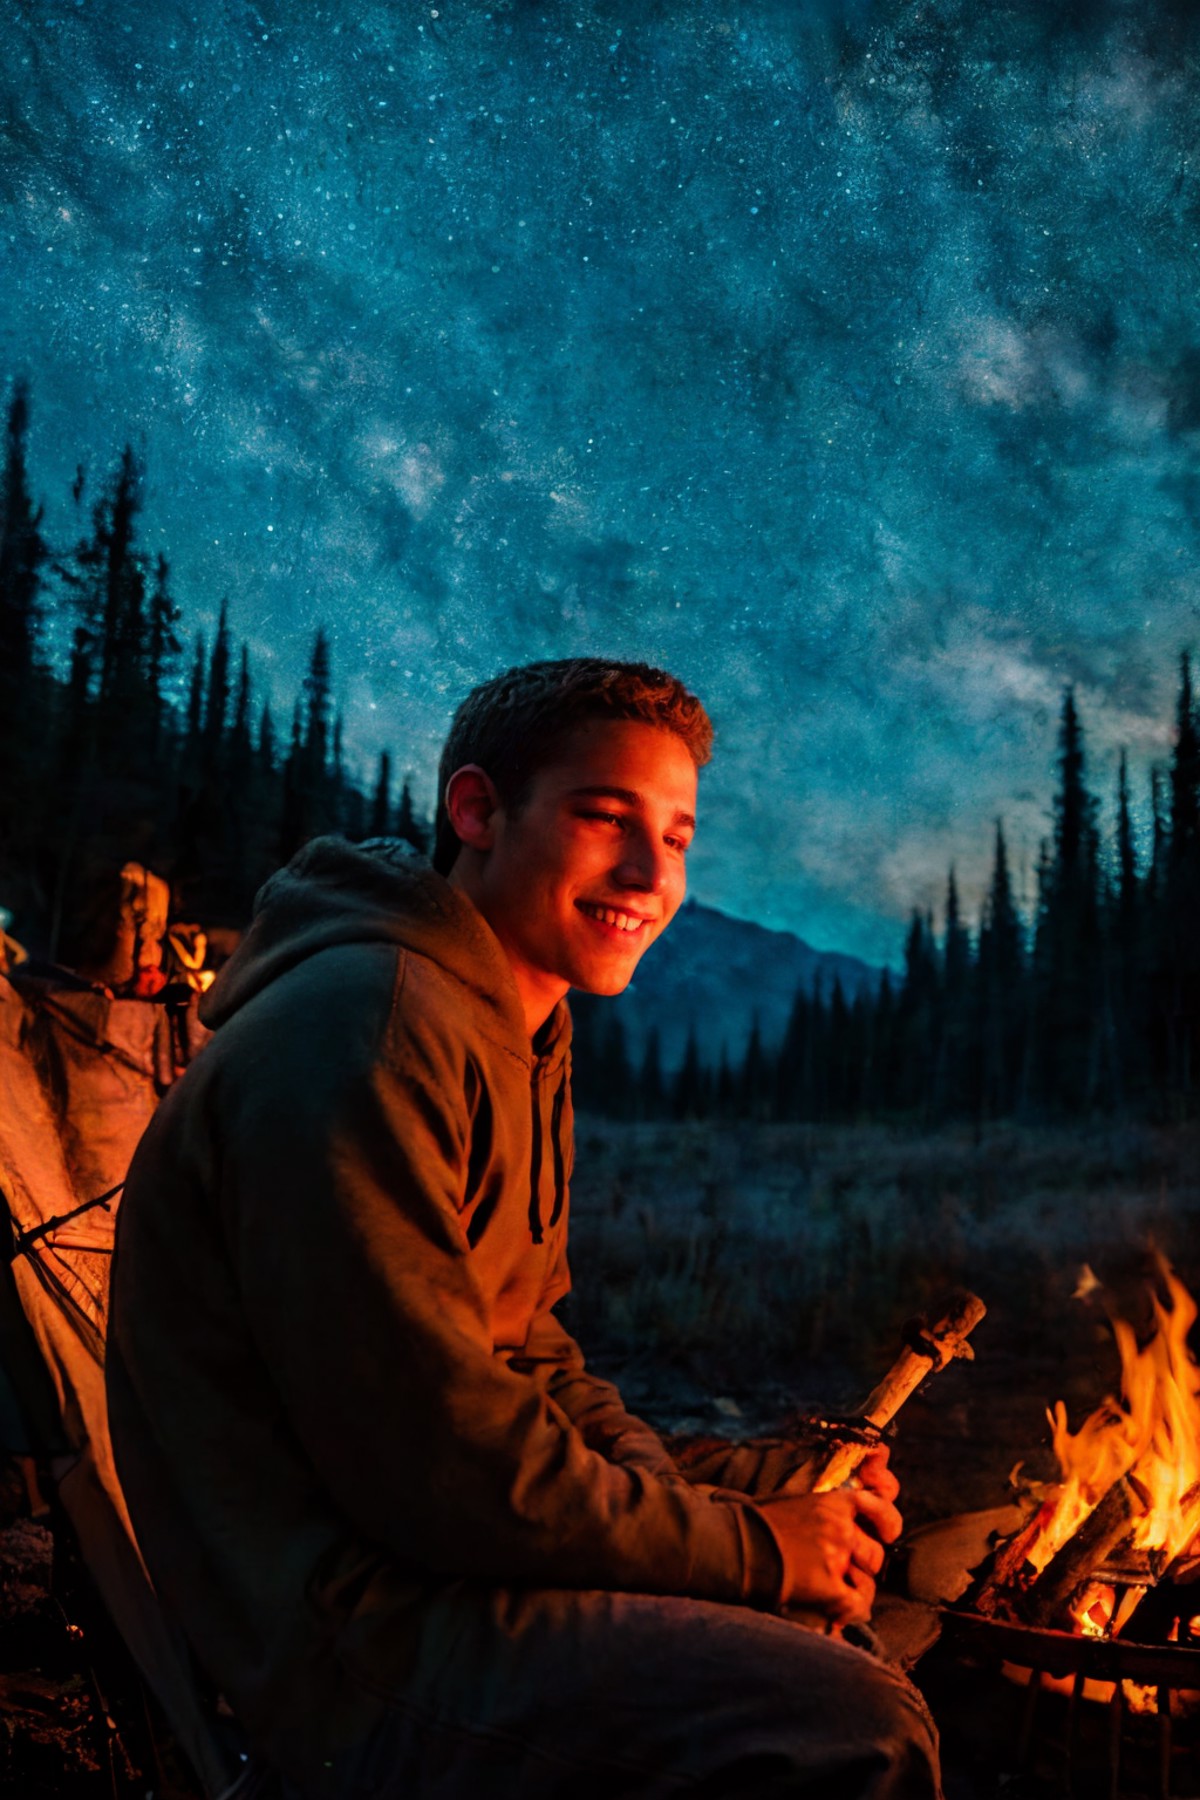 Outdoors nighttime, solo, 1man, 20yo slim dg_ShawnPyfrom, wearing hoodie, sitting in front of a campfire roasting marshmal...